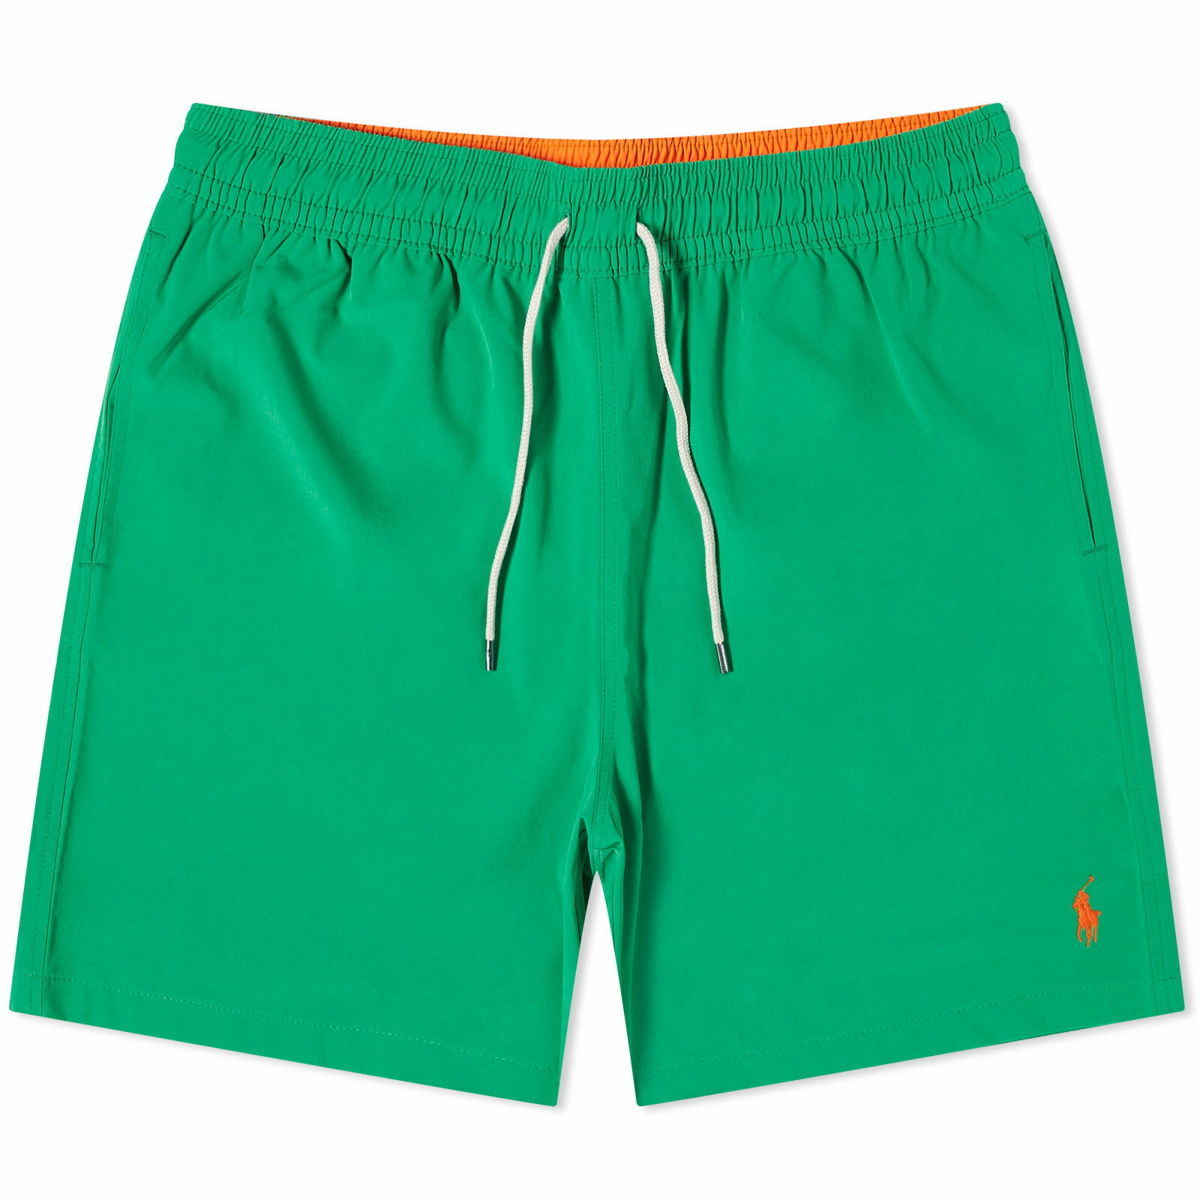 Polo Ralph Lauren X Wimbledon Athletic Shorts, Stem, Stem, S